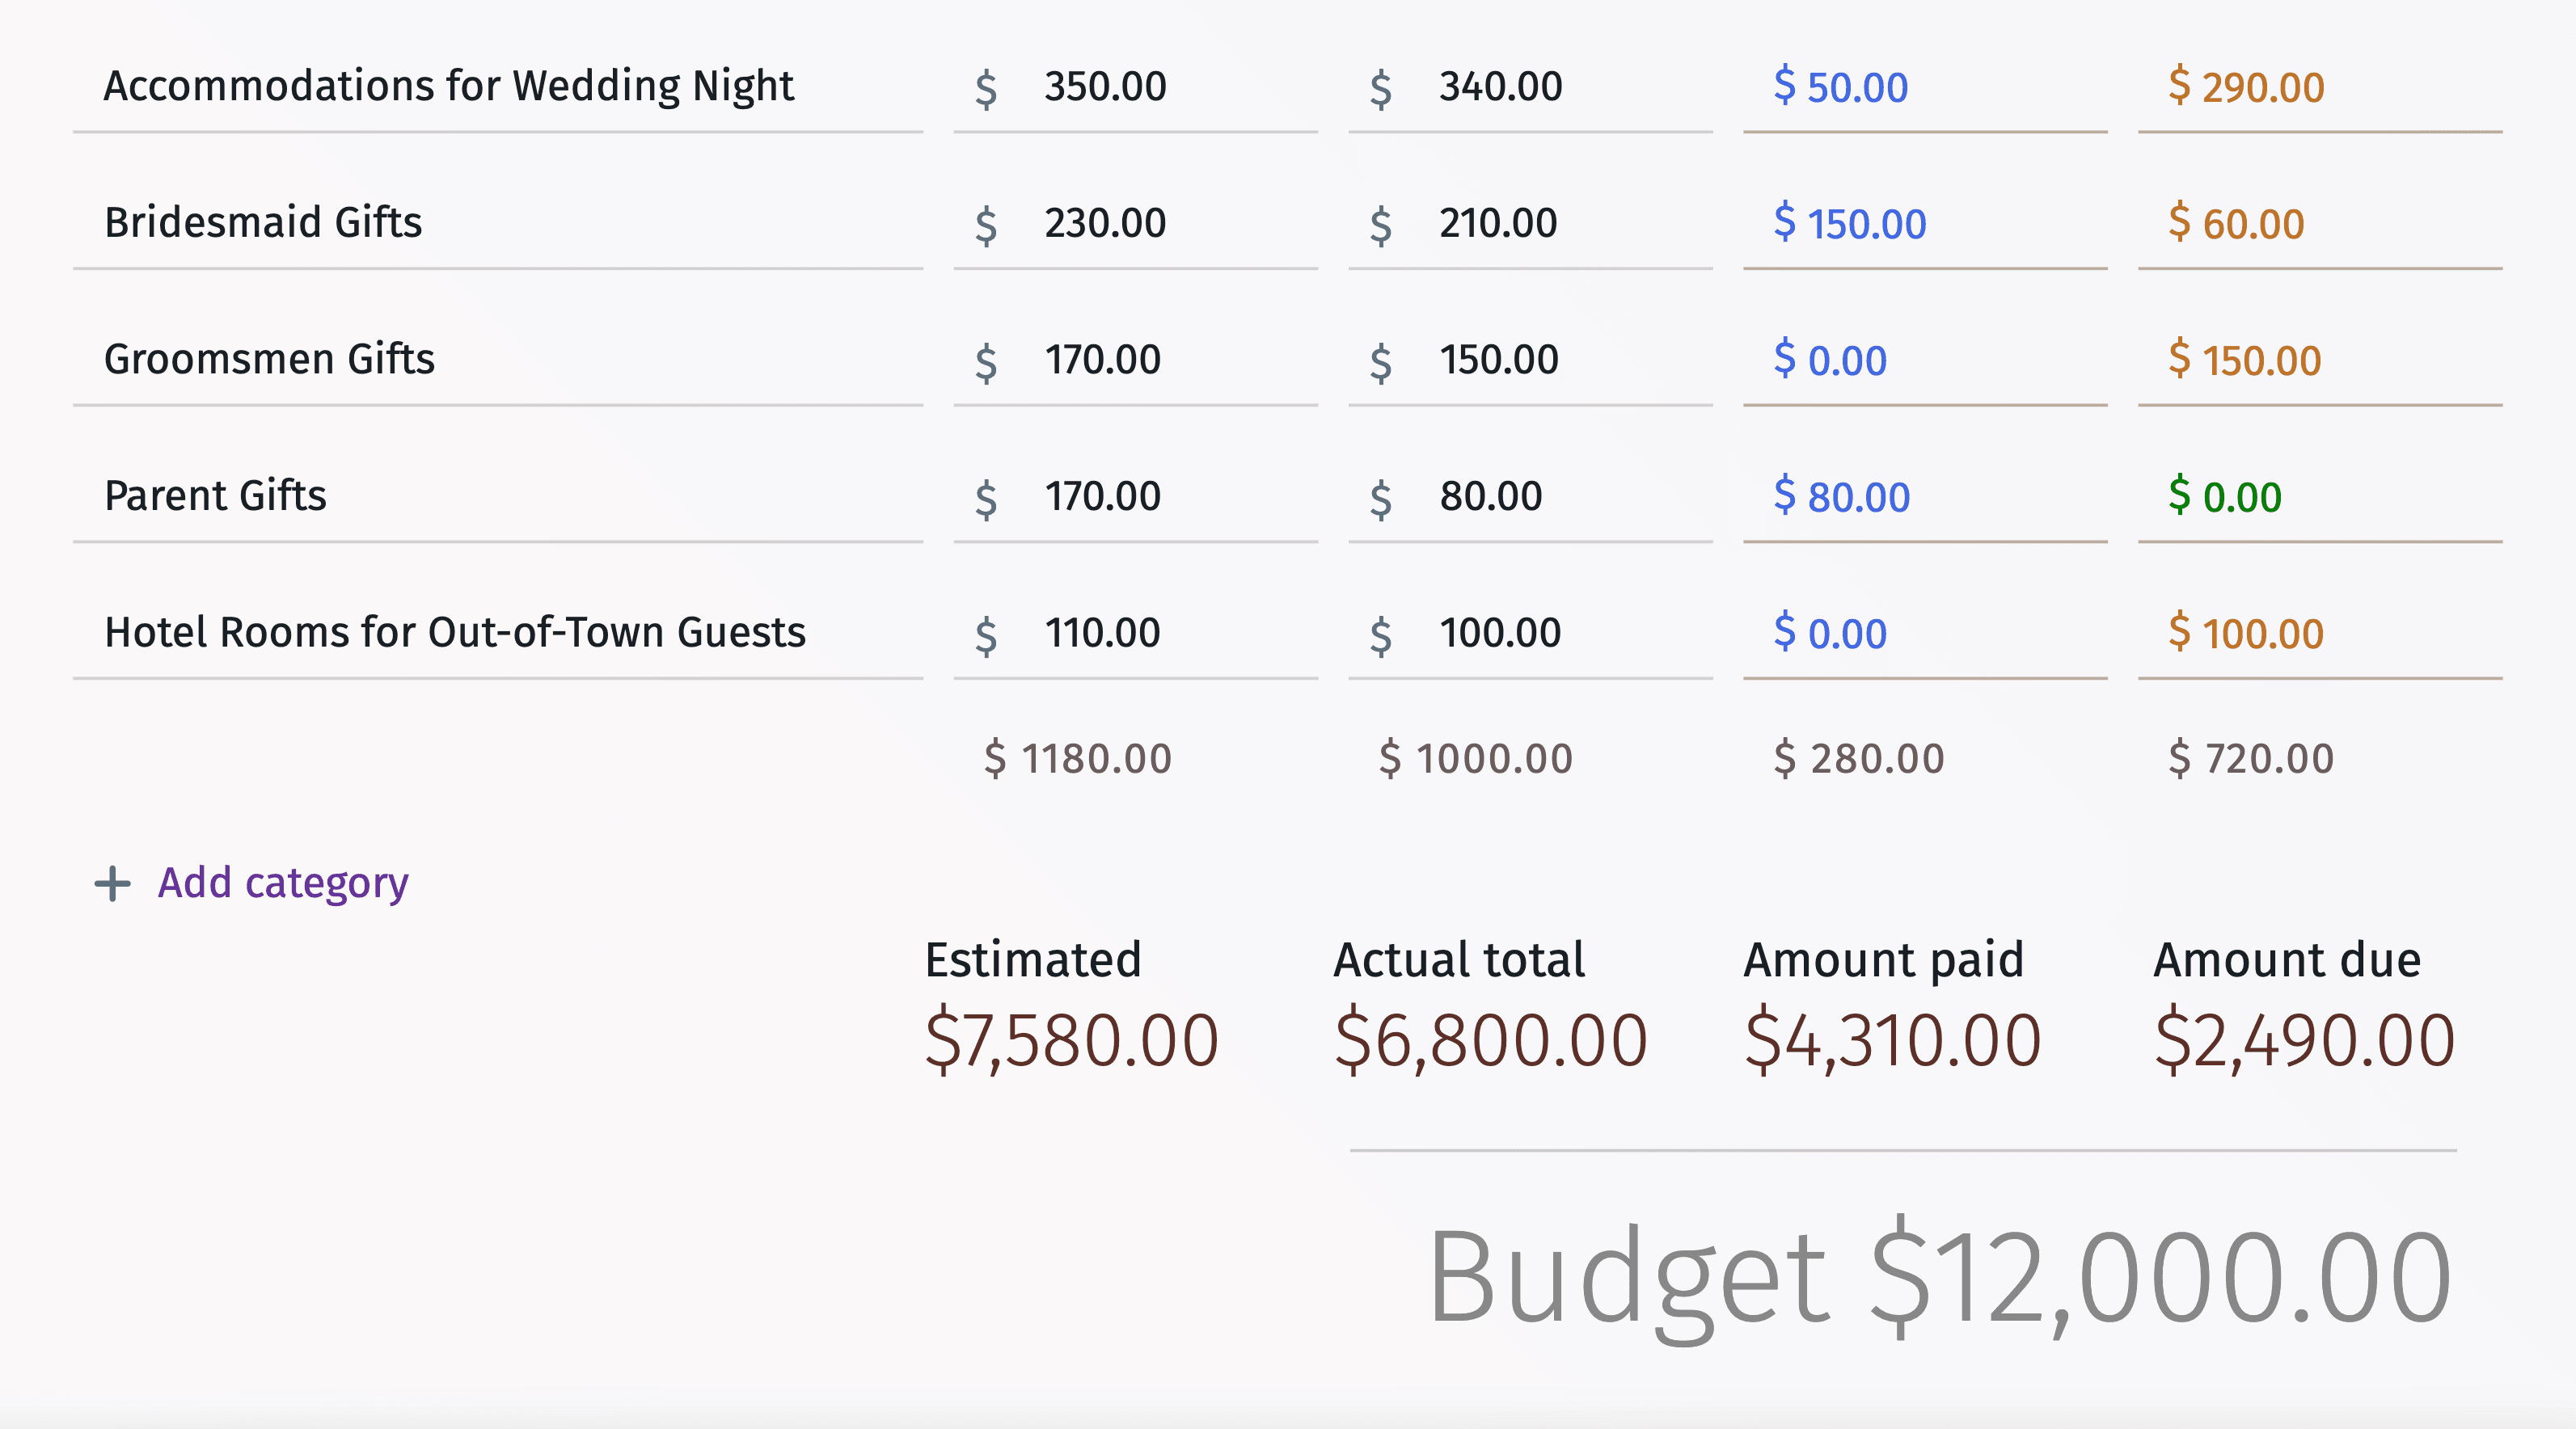 Interface of wedding budget calculator